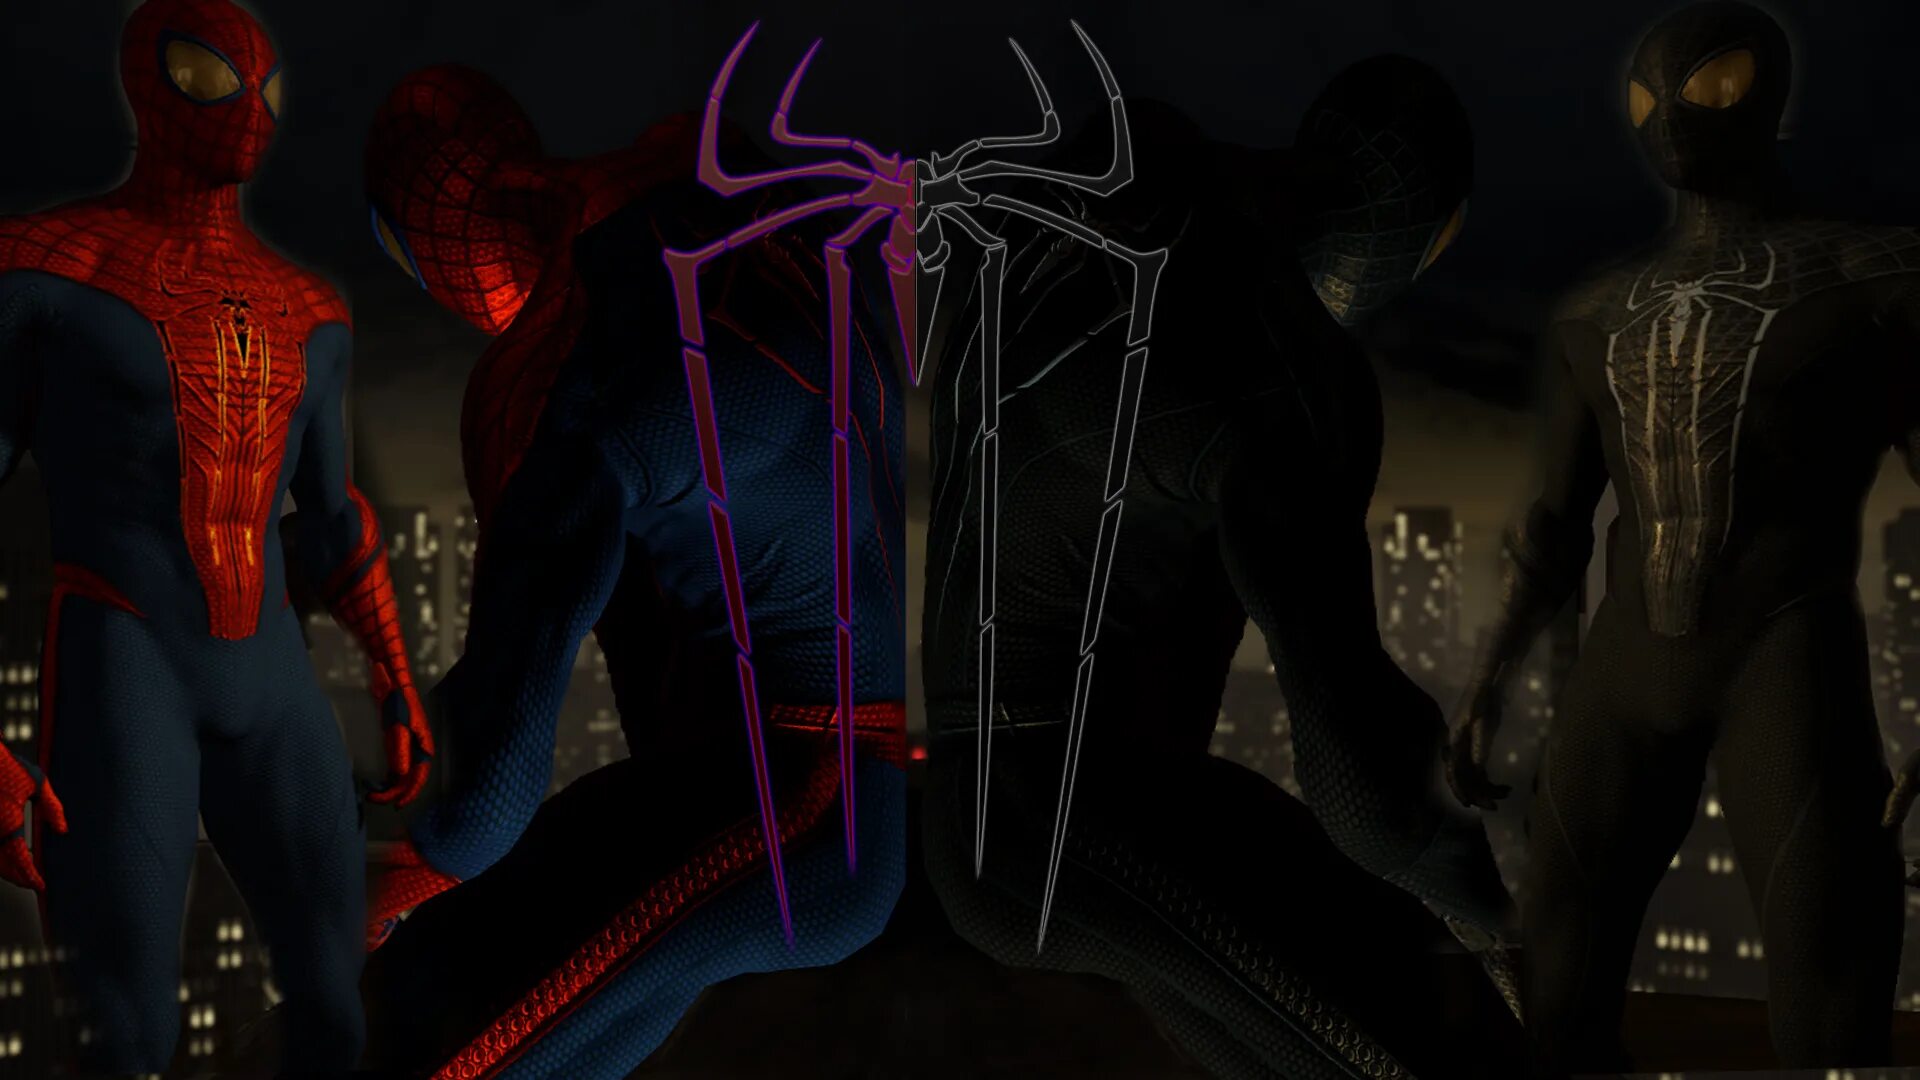 Spider man 2014 игра. The amazing Spider-man 2 костюмы. Amazing Spider man 2012 Suit. The amazing Spider-man 2 костюмы симьбиот. The amazing Spider-man 2 скины.